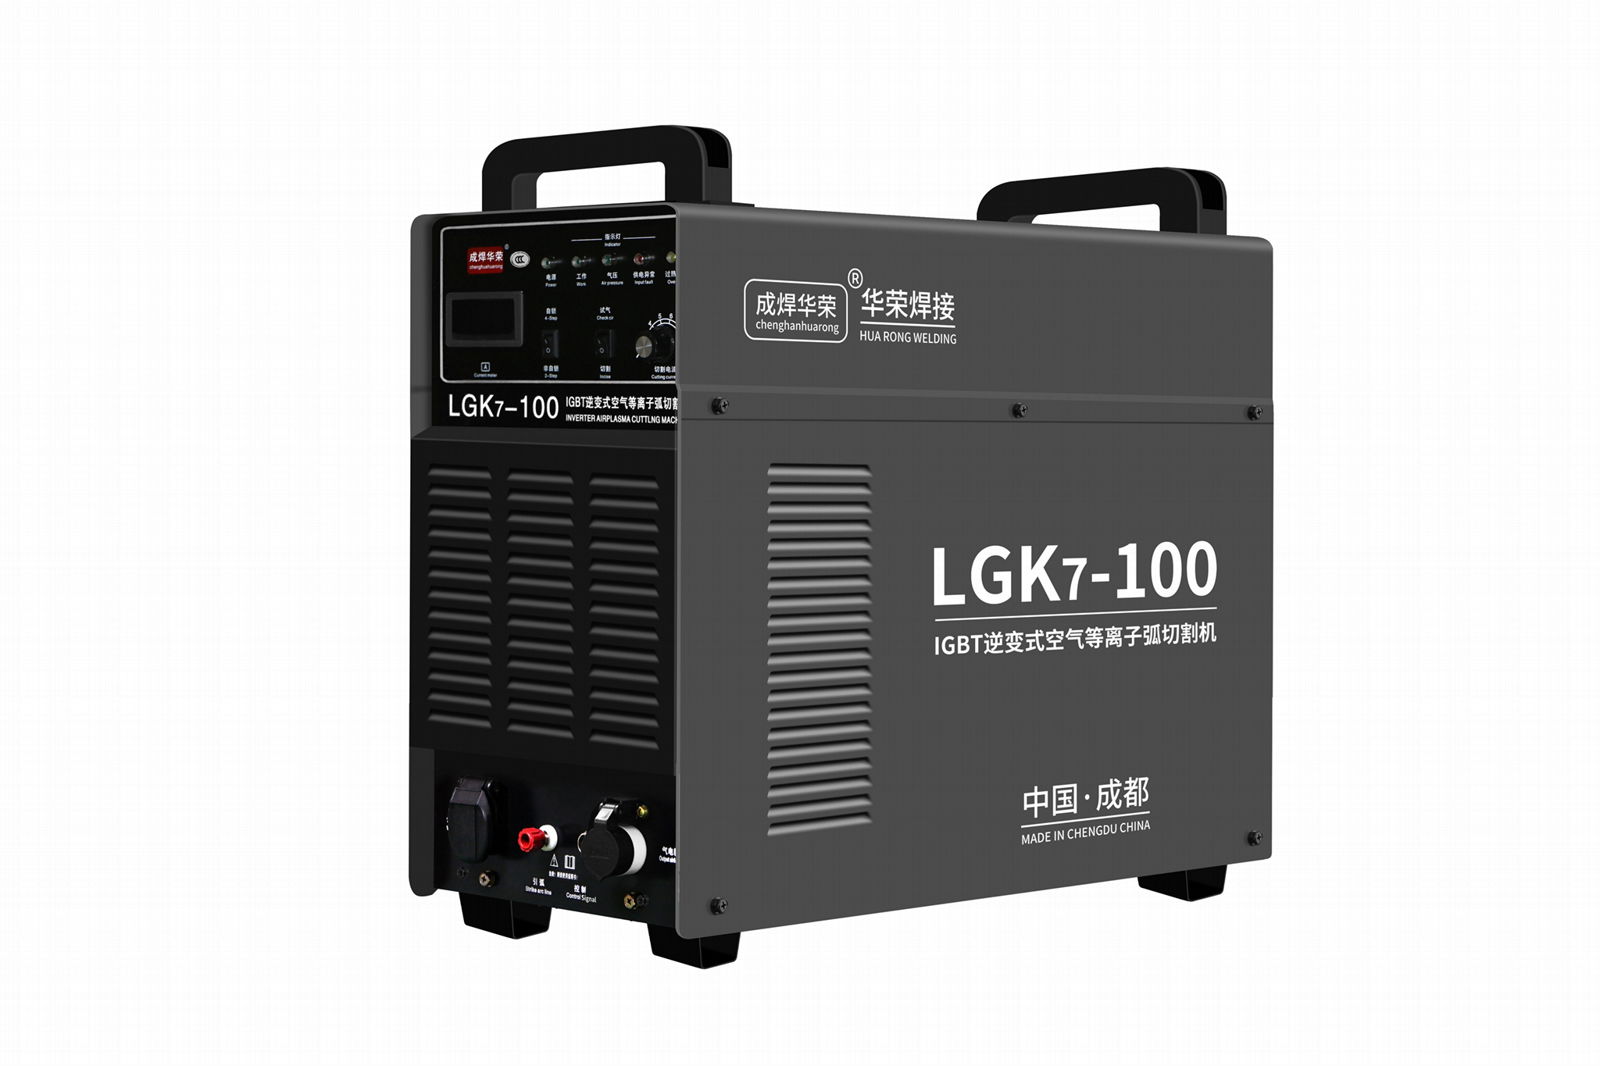 LGK7-100 IGBT inverter plasma arc cutting machine